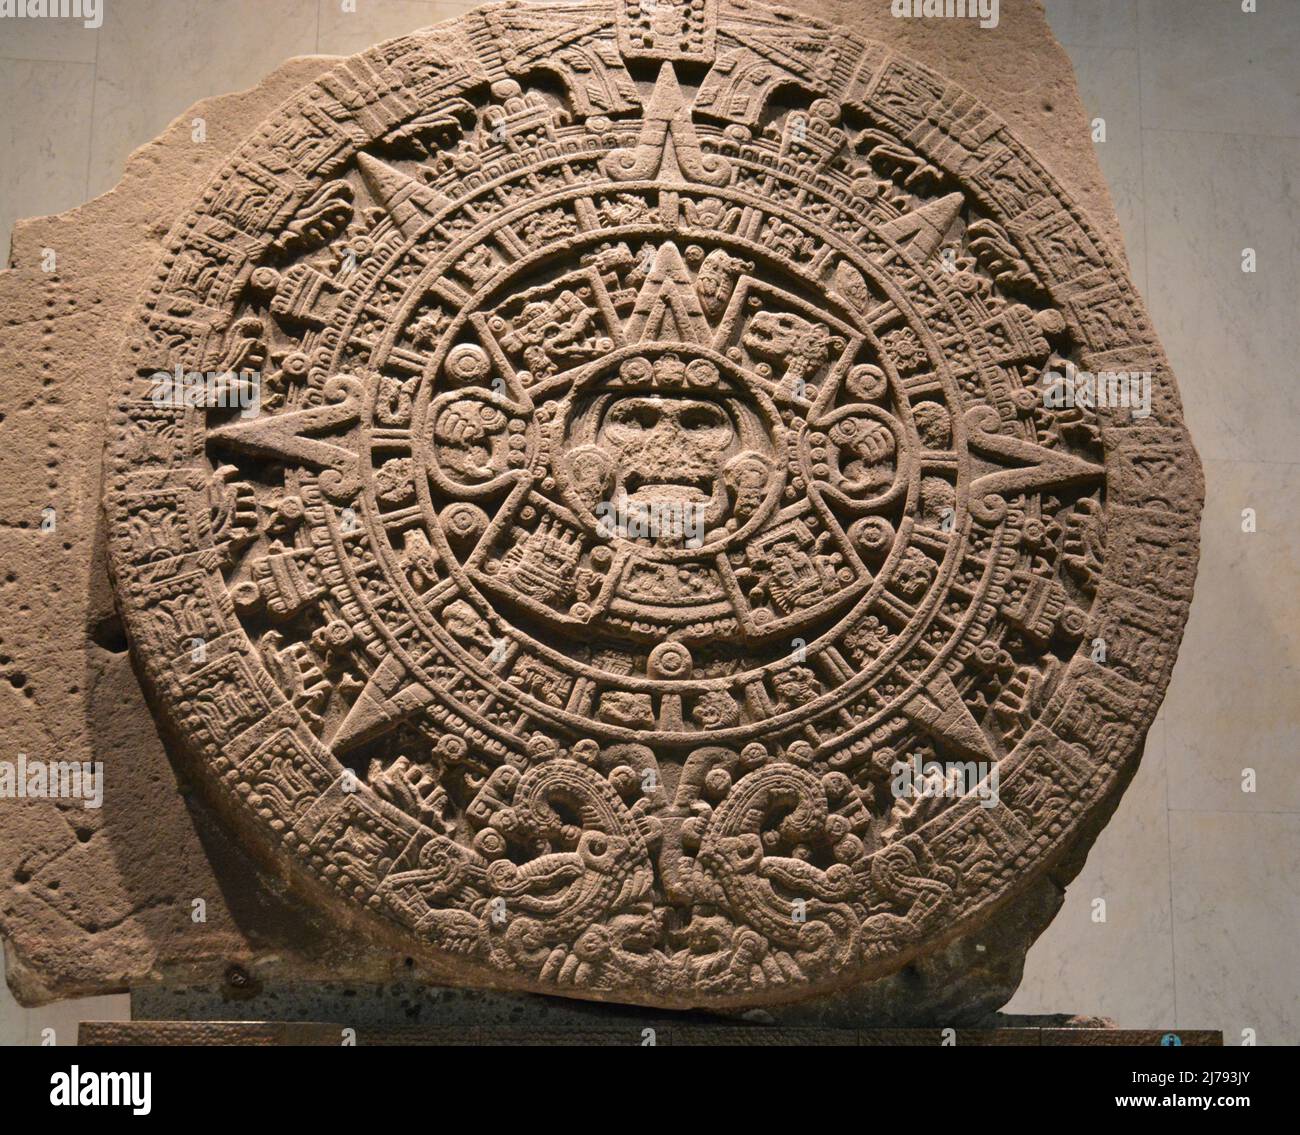 Azteken Kalender oder La Piedra del Sol, Nationales Museum für Anthropologie Stockfoto